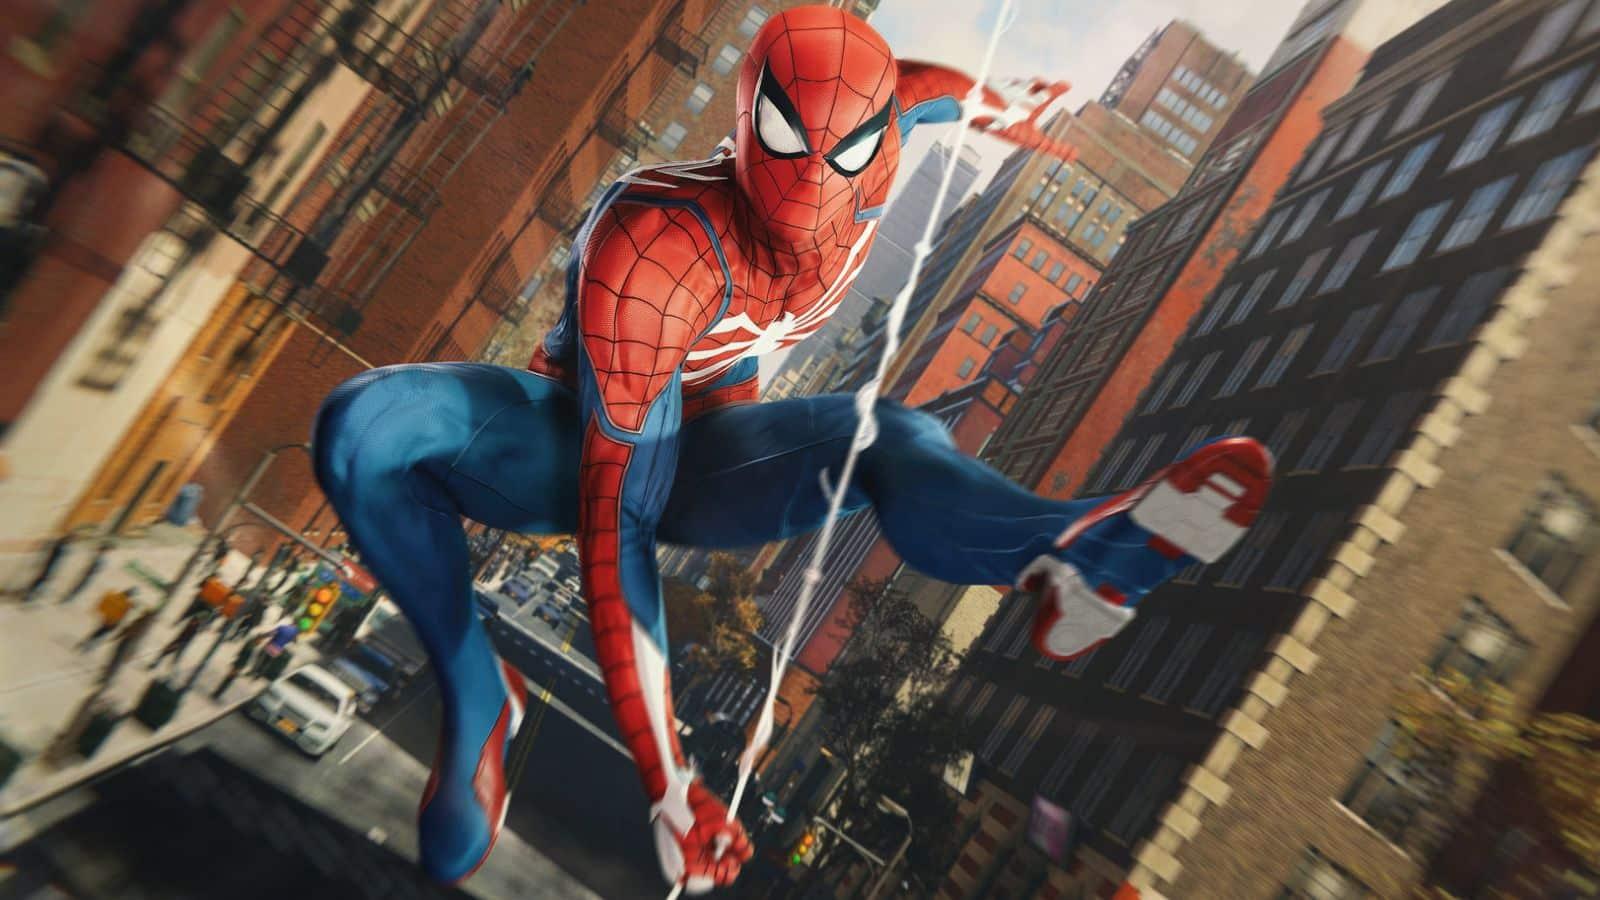 Spiderman swinging through New York